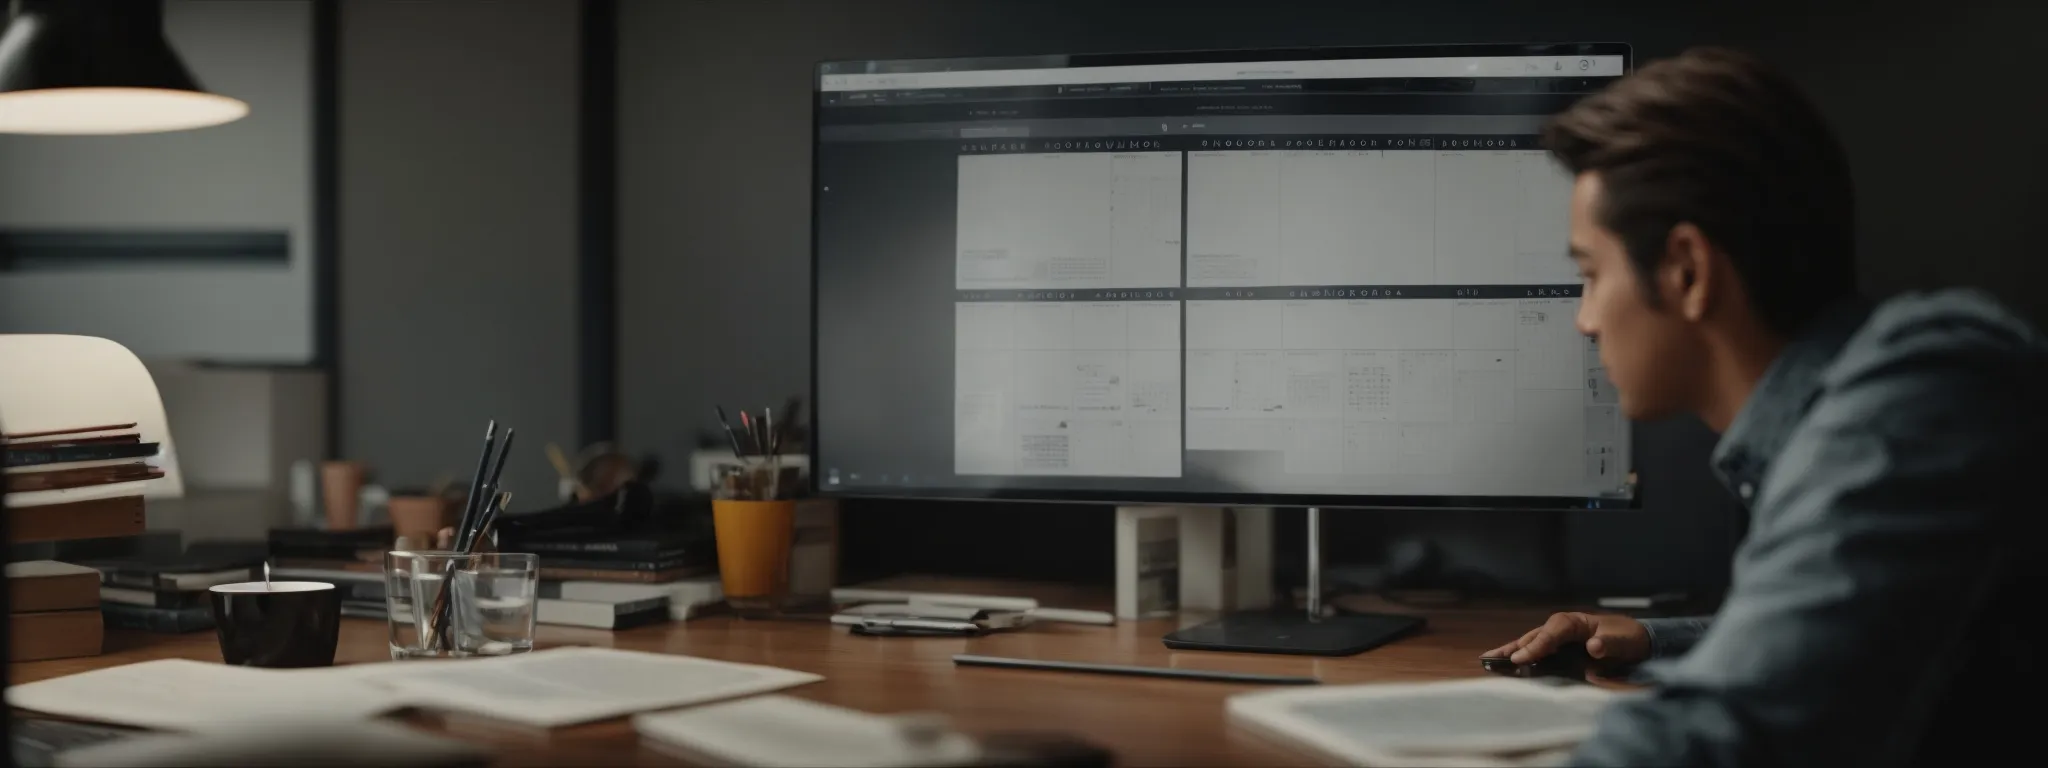 a person sits at a modern desk, planning a content schedule on a digital calendar displayed on a sleek computer screen.